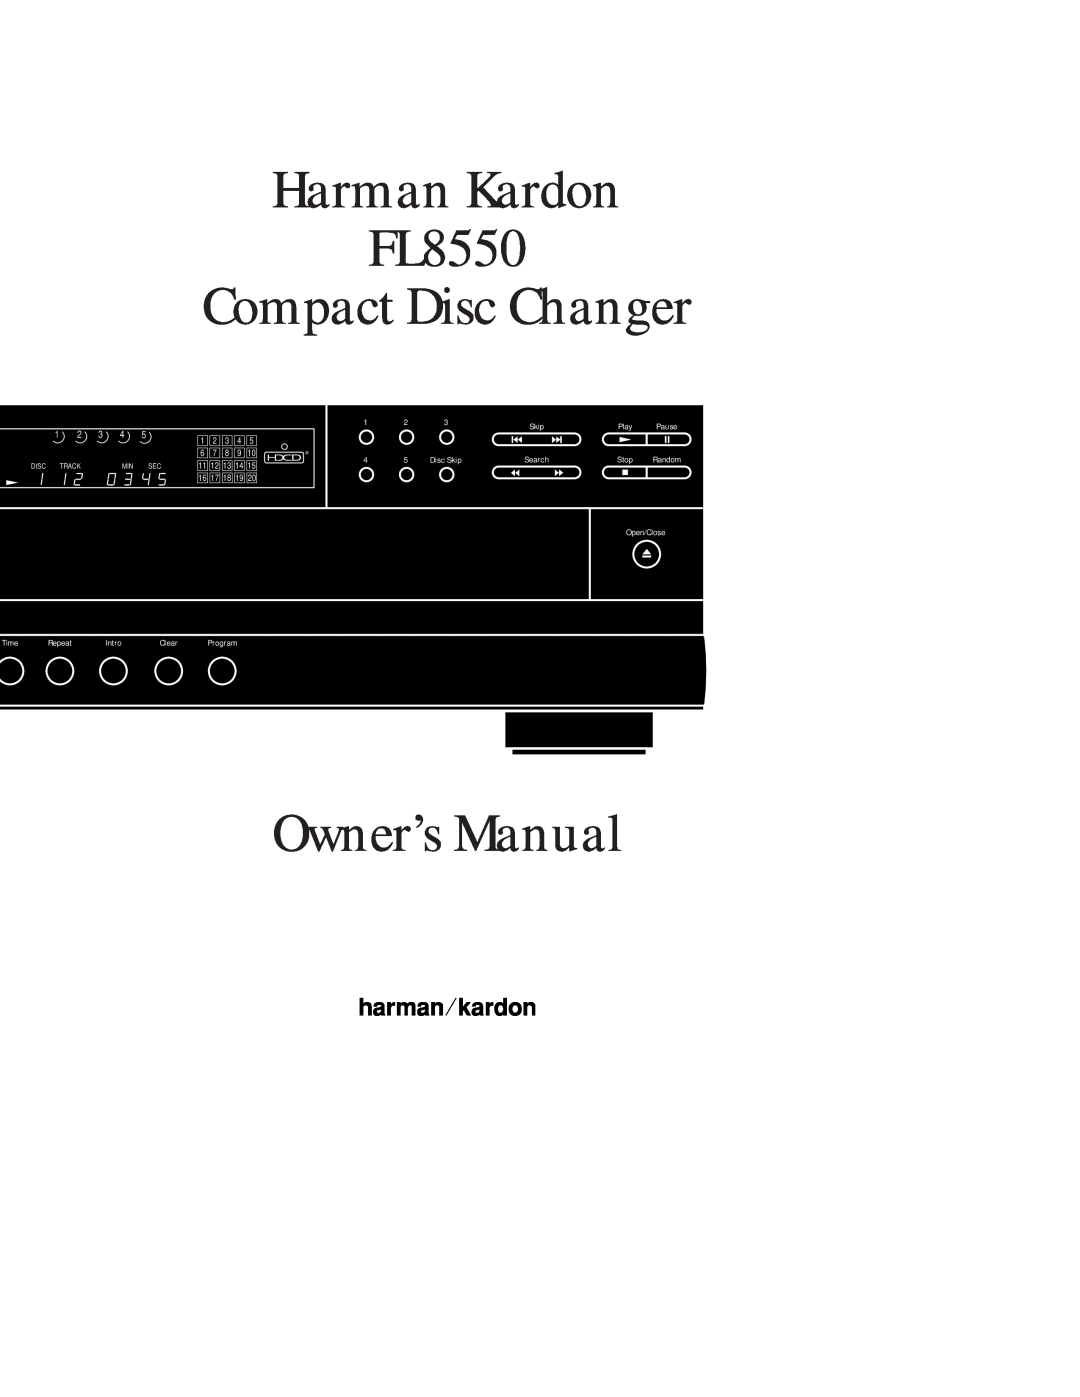 Harman-Kardon owner manual Harman Kardon FL8550 Compact Disc Changer, 1 2 3 4 5 6 7 8 9 10, Skip, Play, Pause, Stop 